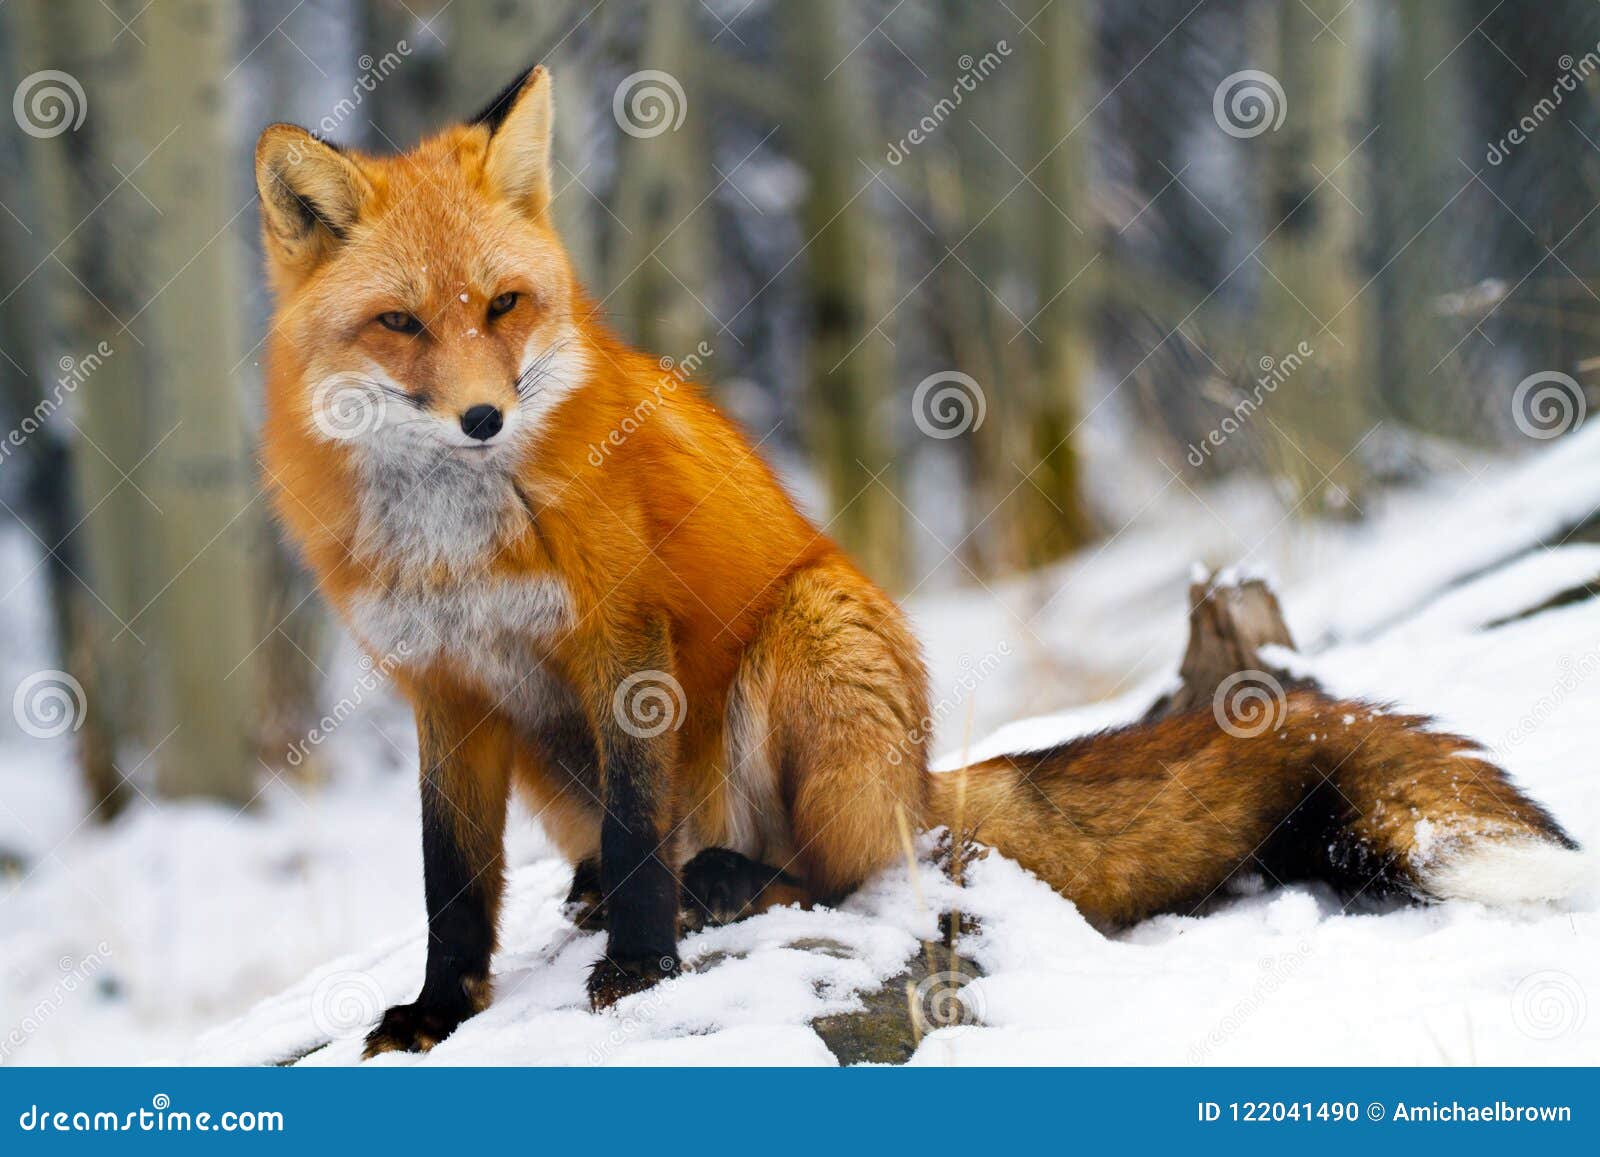 red fox yukon territories canada